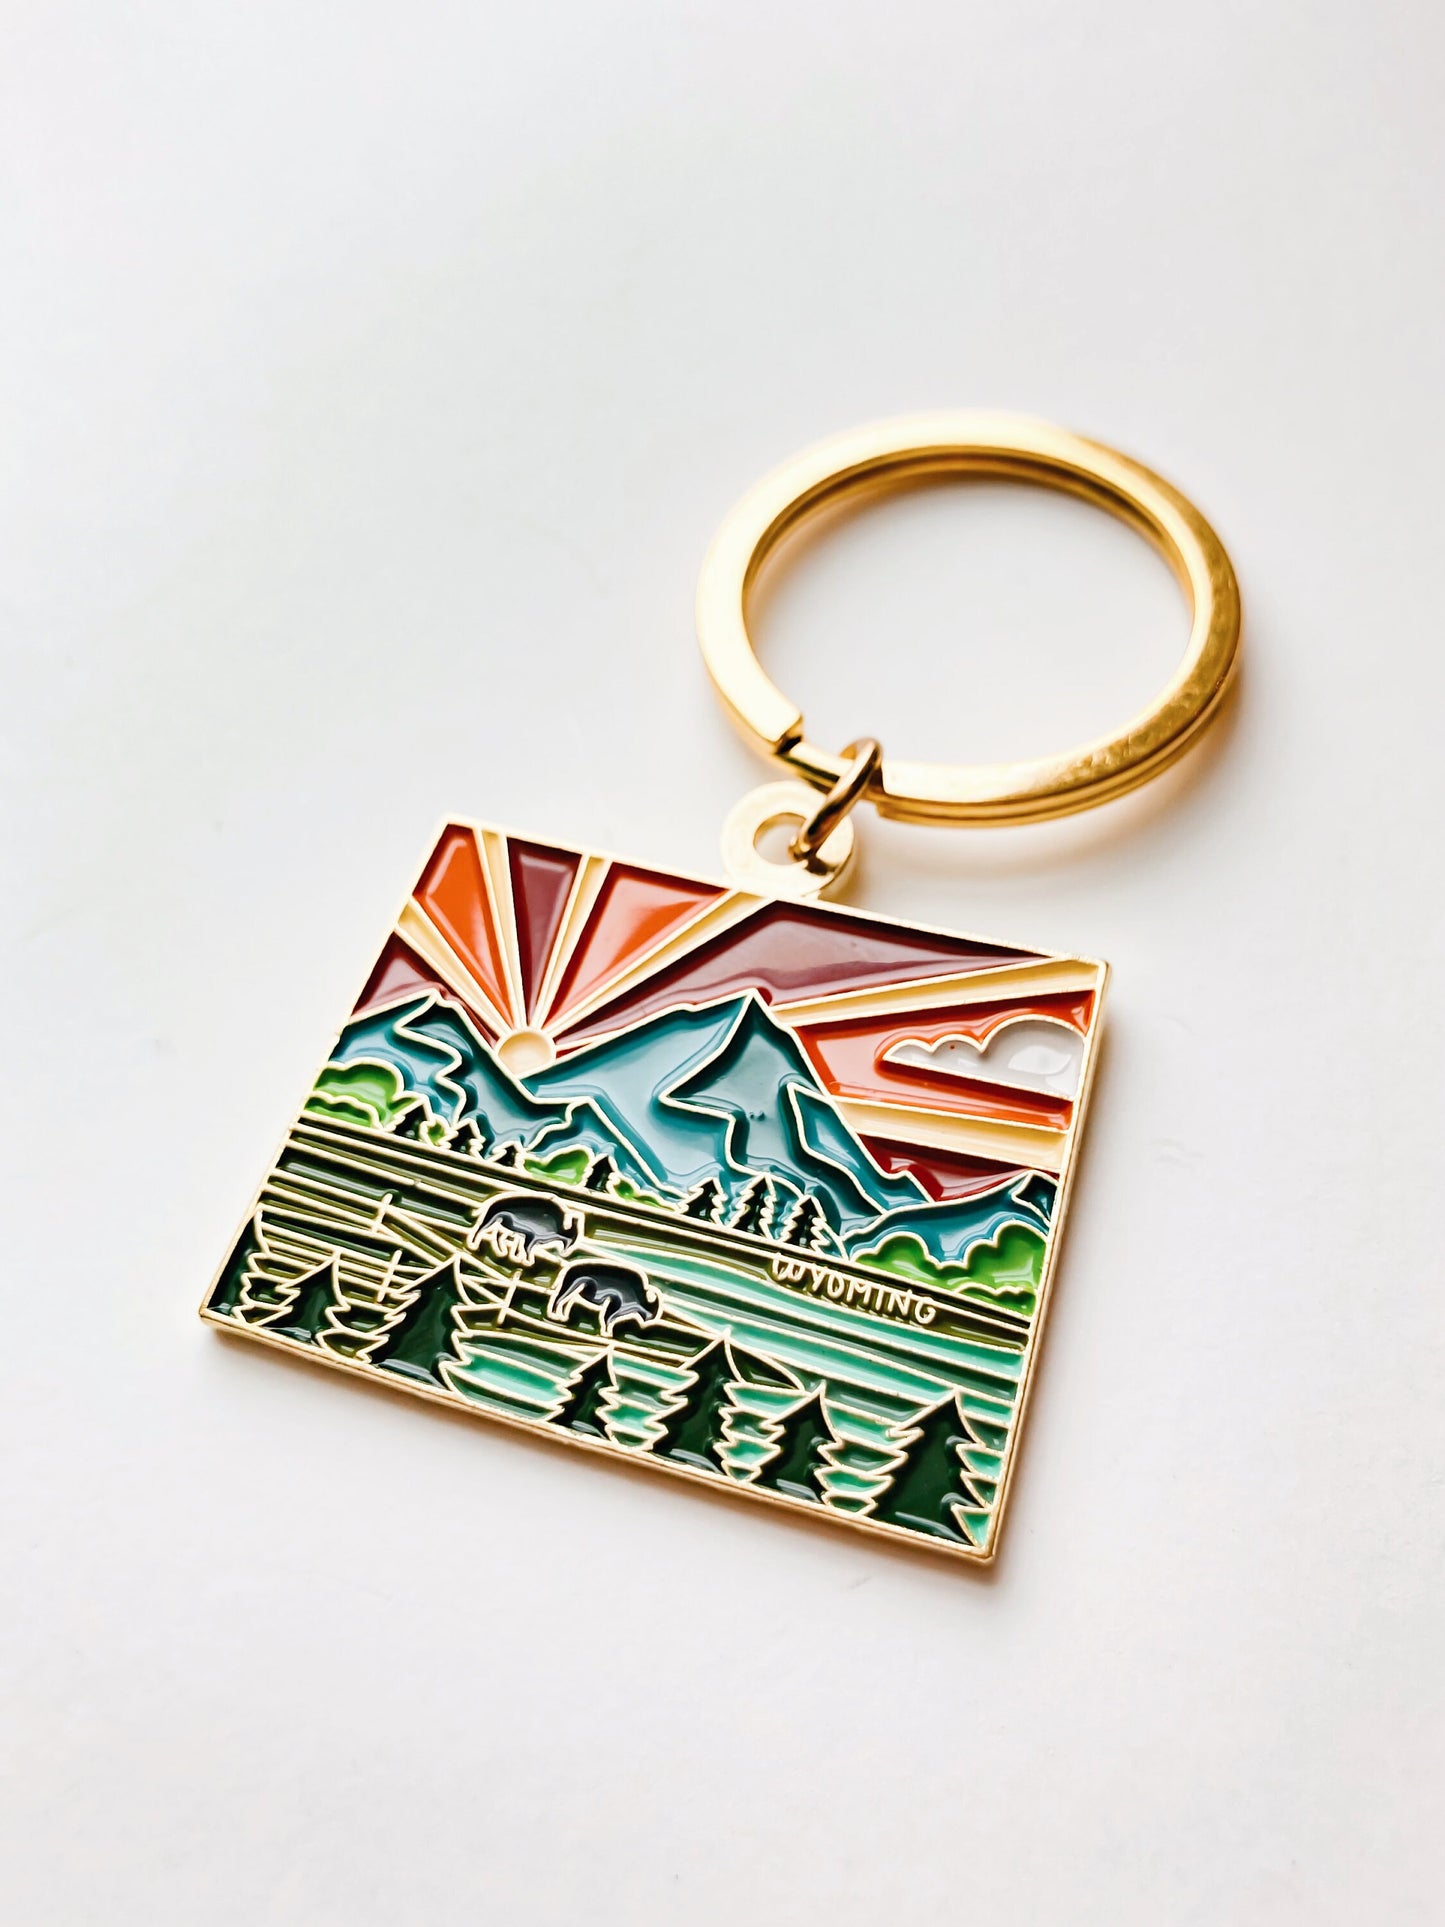 Wyoming Gold Enamel Keychain | Wyoming State Key Ring | Soft Enamel Illustrated State Keychain 1.5"